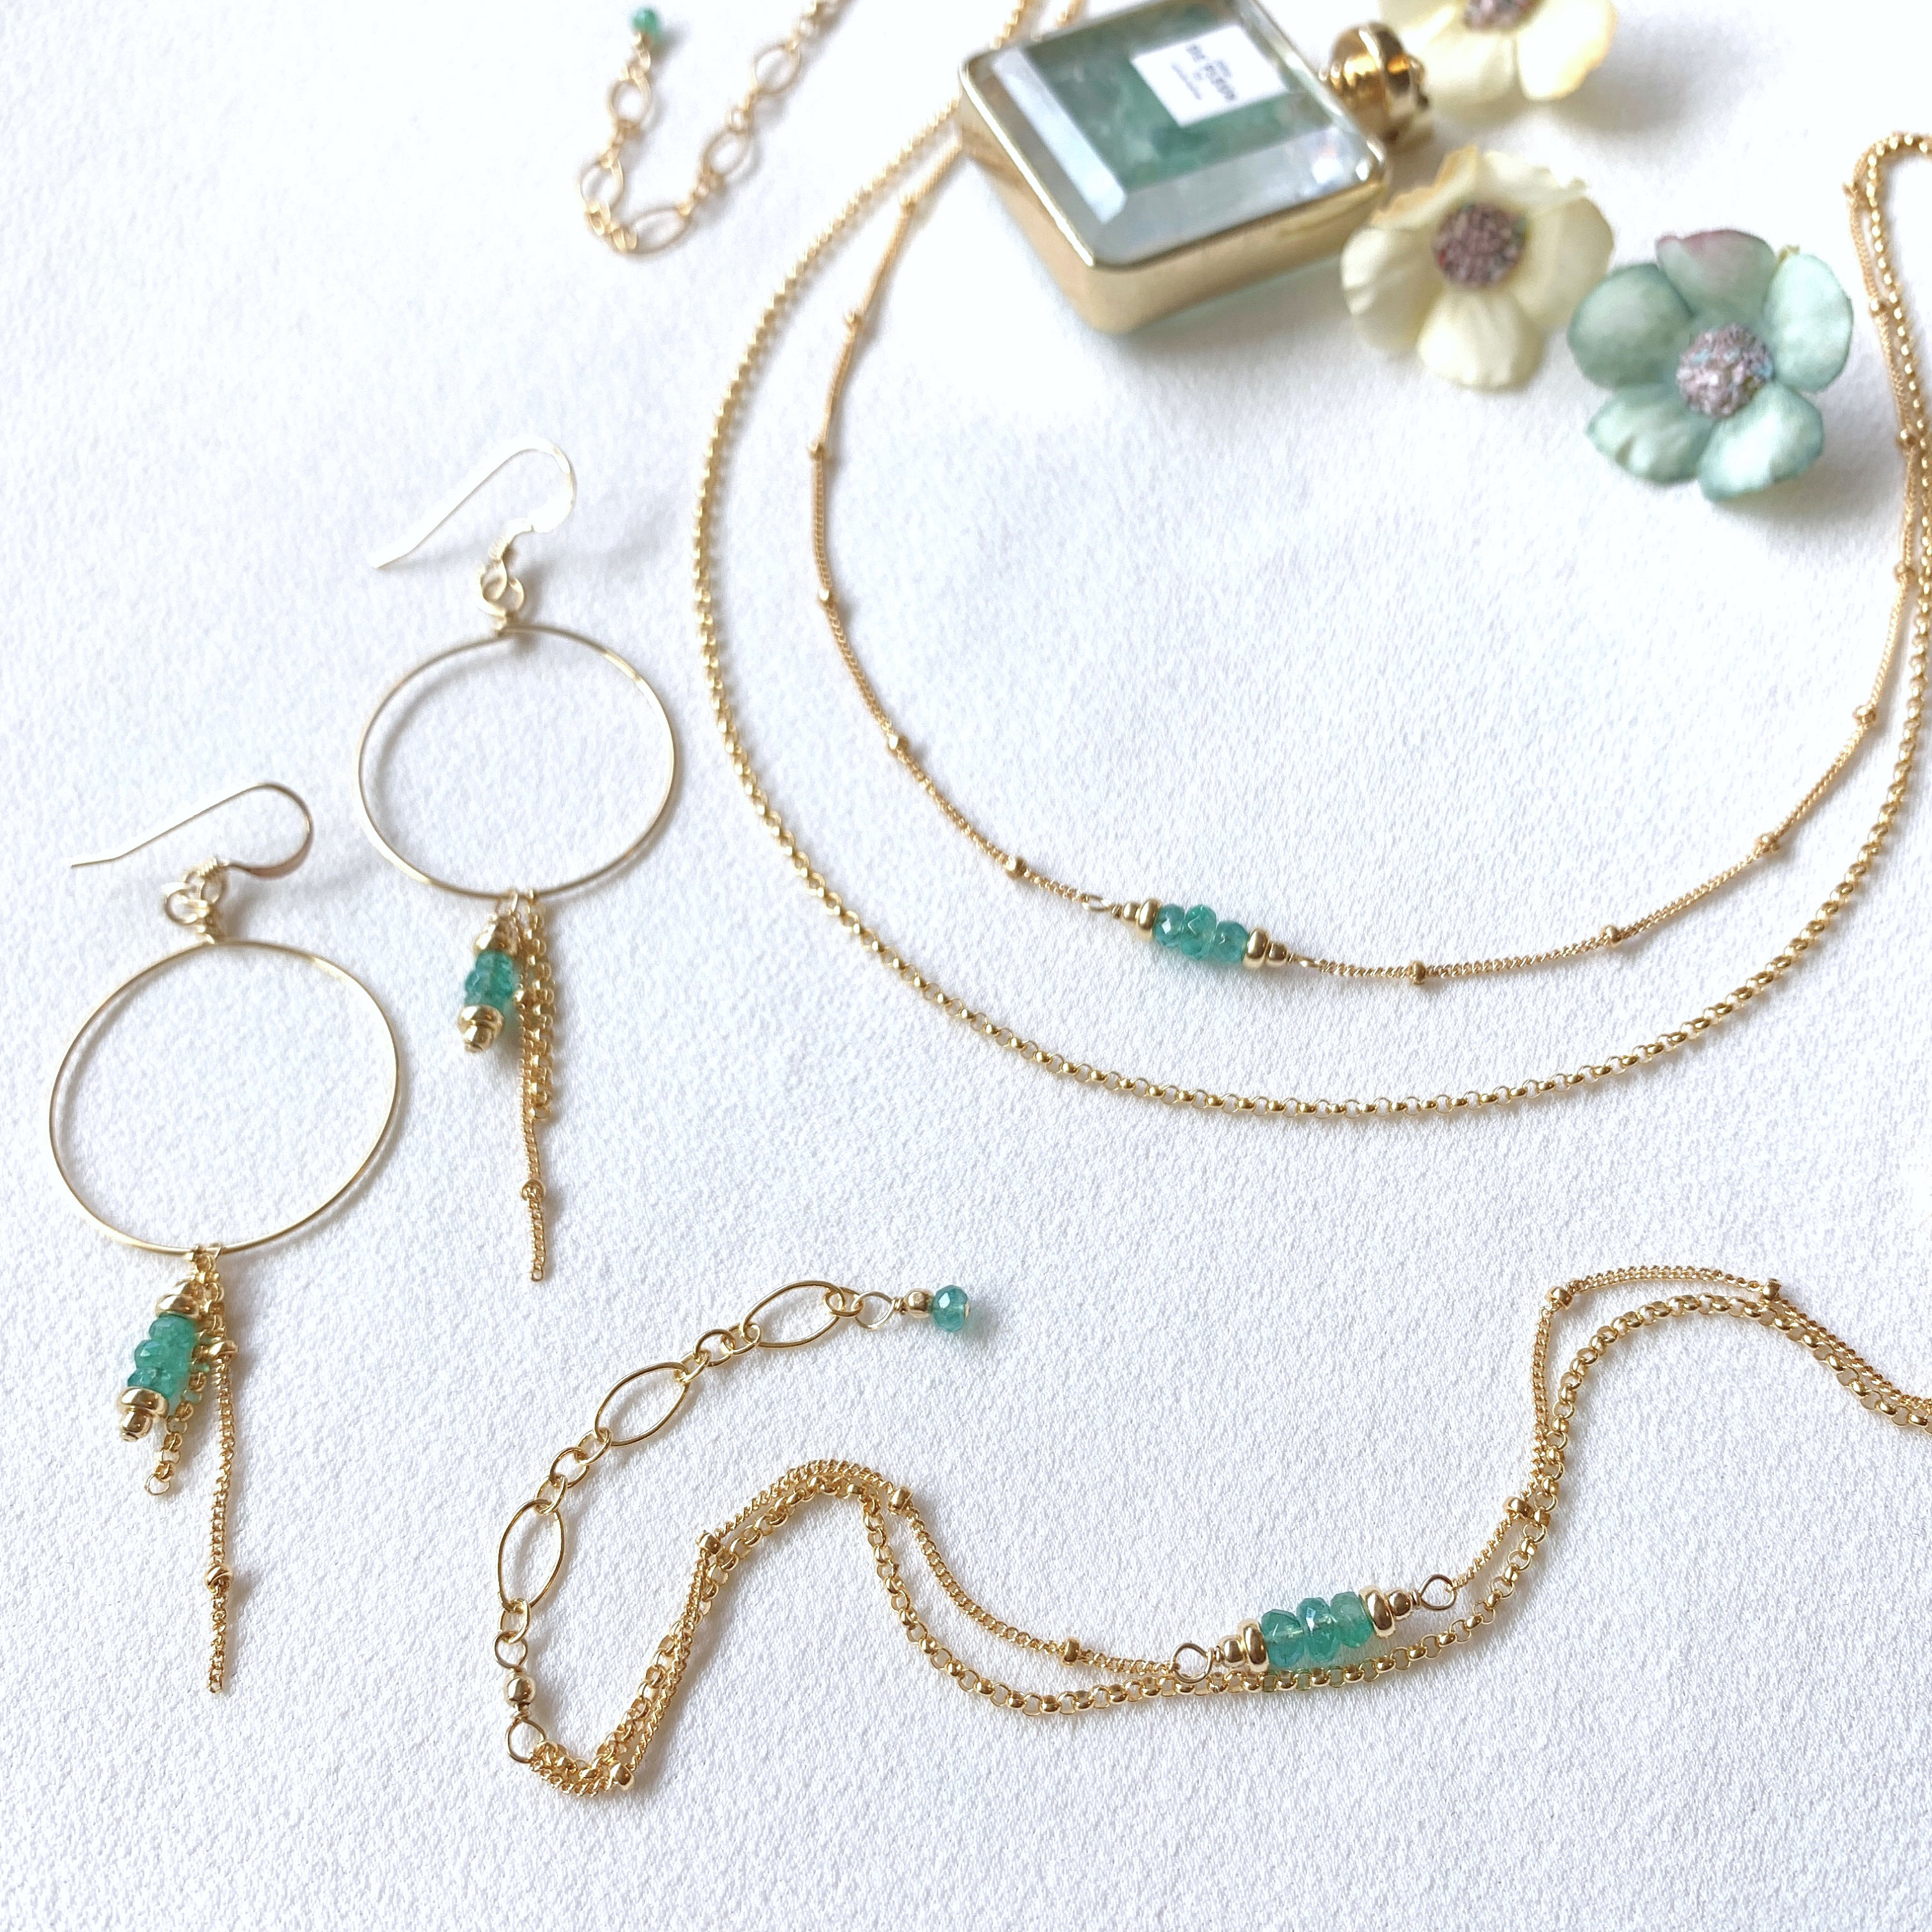 La hanau emerald double strand necklace 14K gold filled / | Etsy